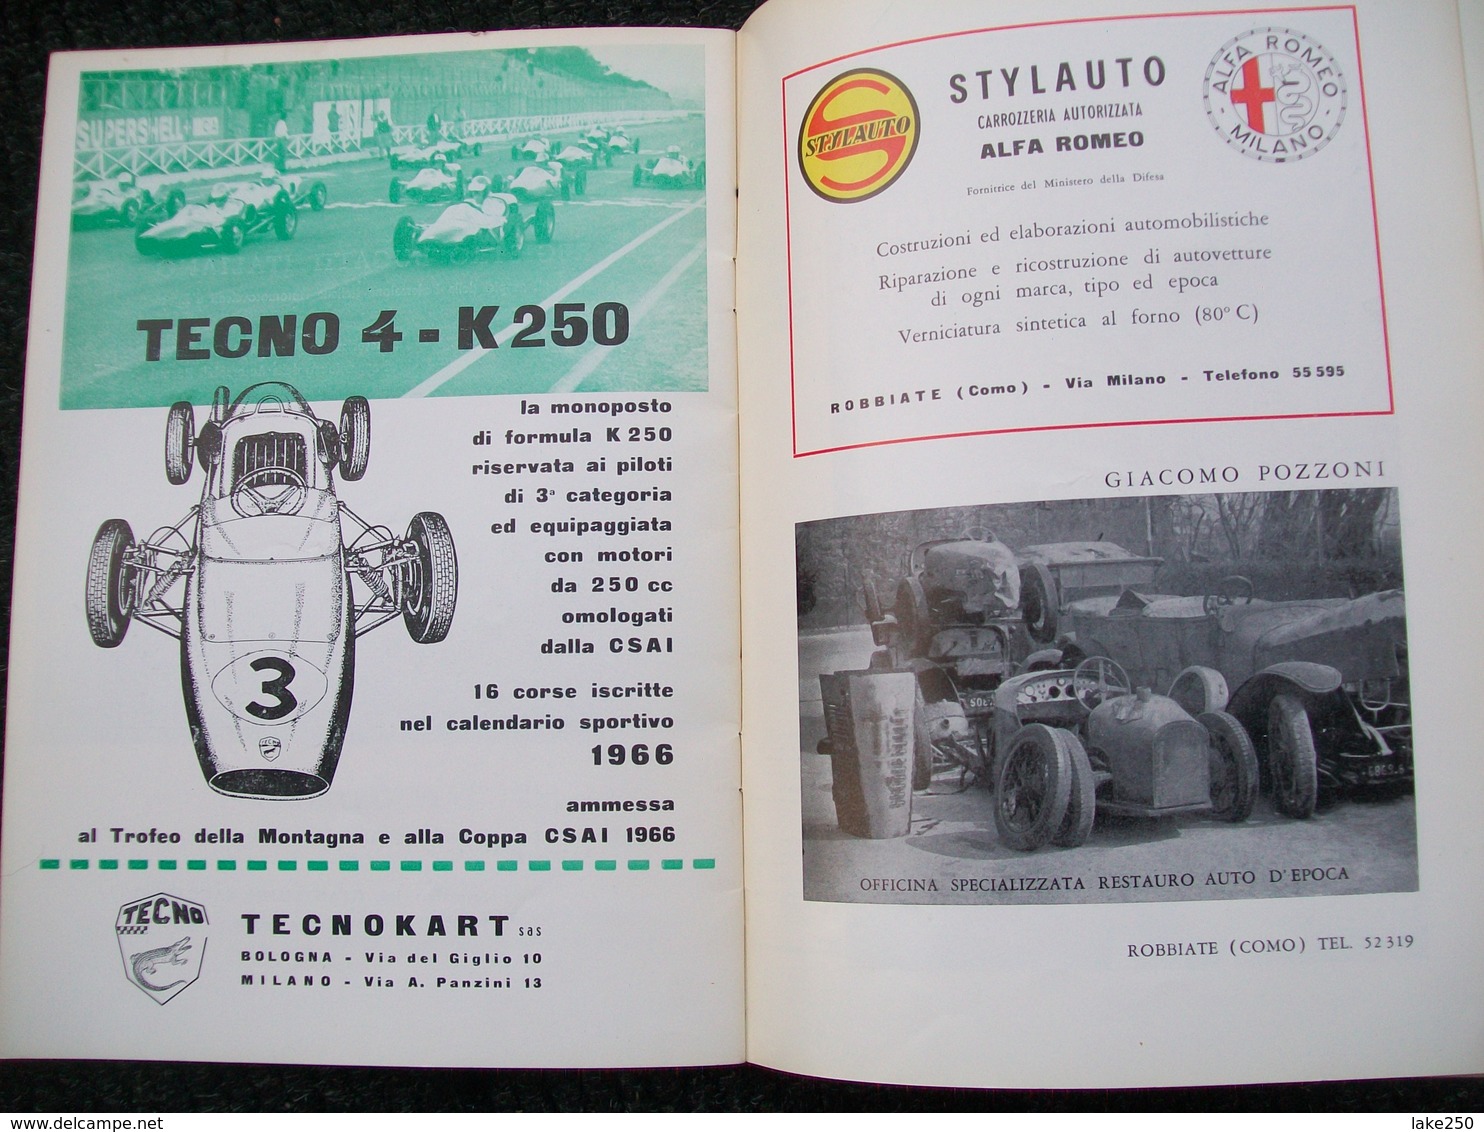 VIII COPPA MONZA Autodromo Nazionale Di Monza 1966 - Motoren